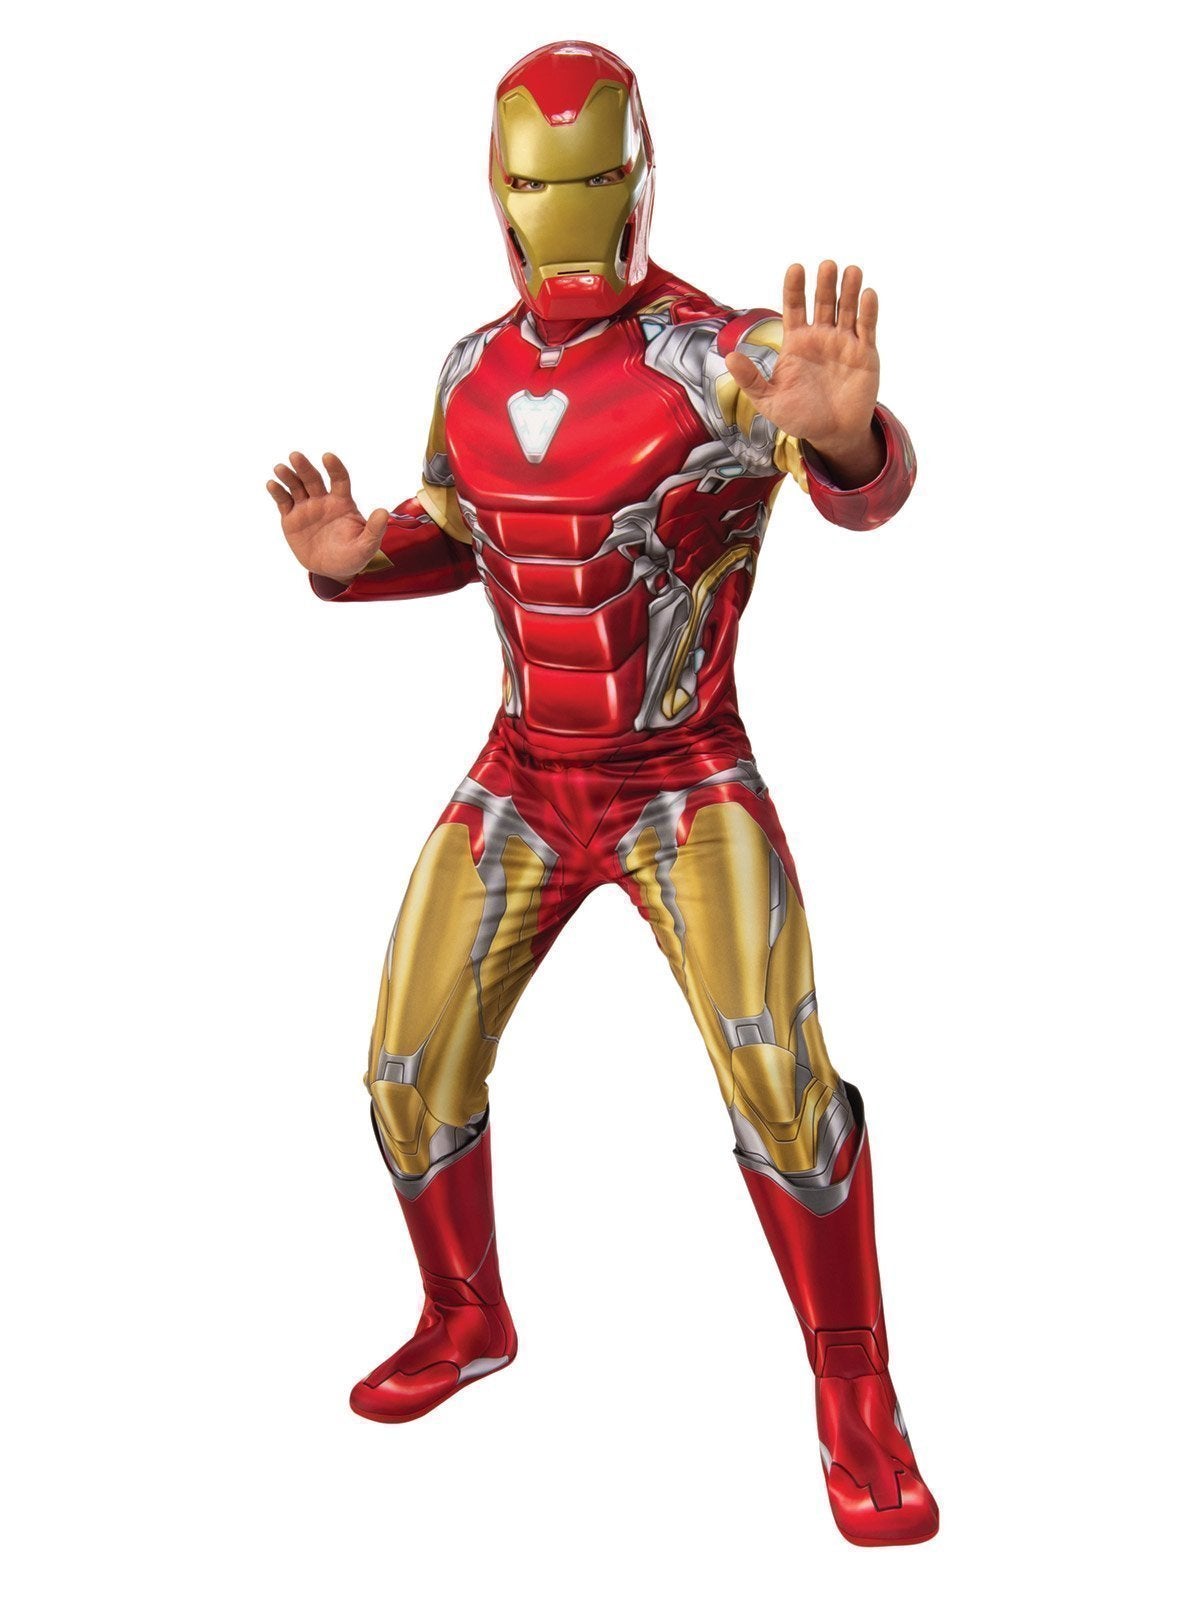 Iron Man Deluxe Costume for Adults - Marvel Avengers | Buy Men's ...